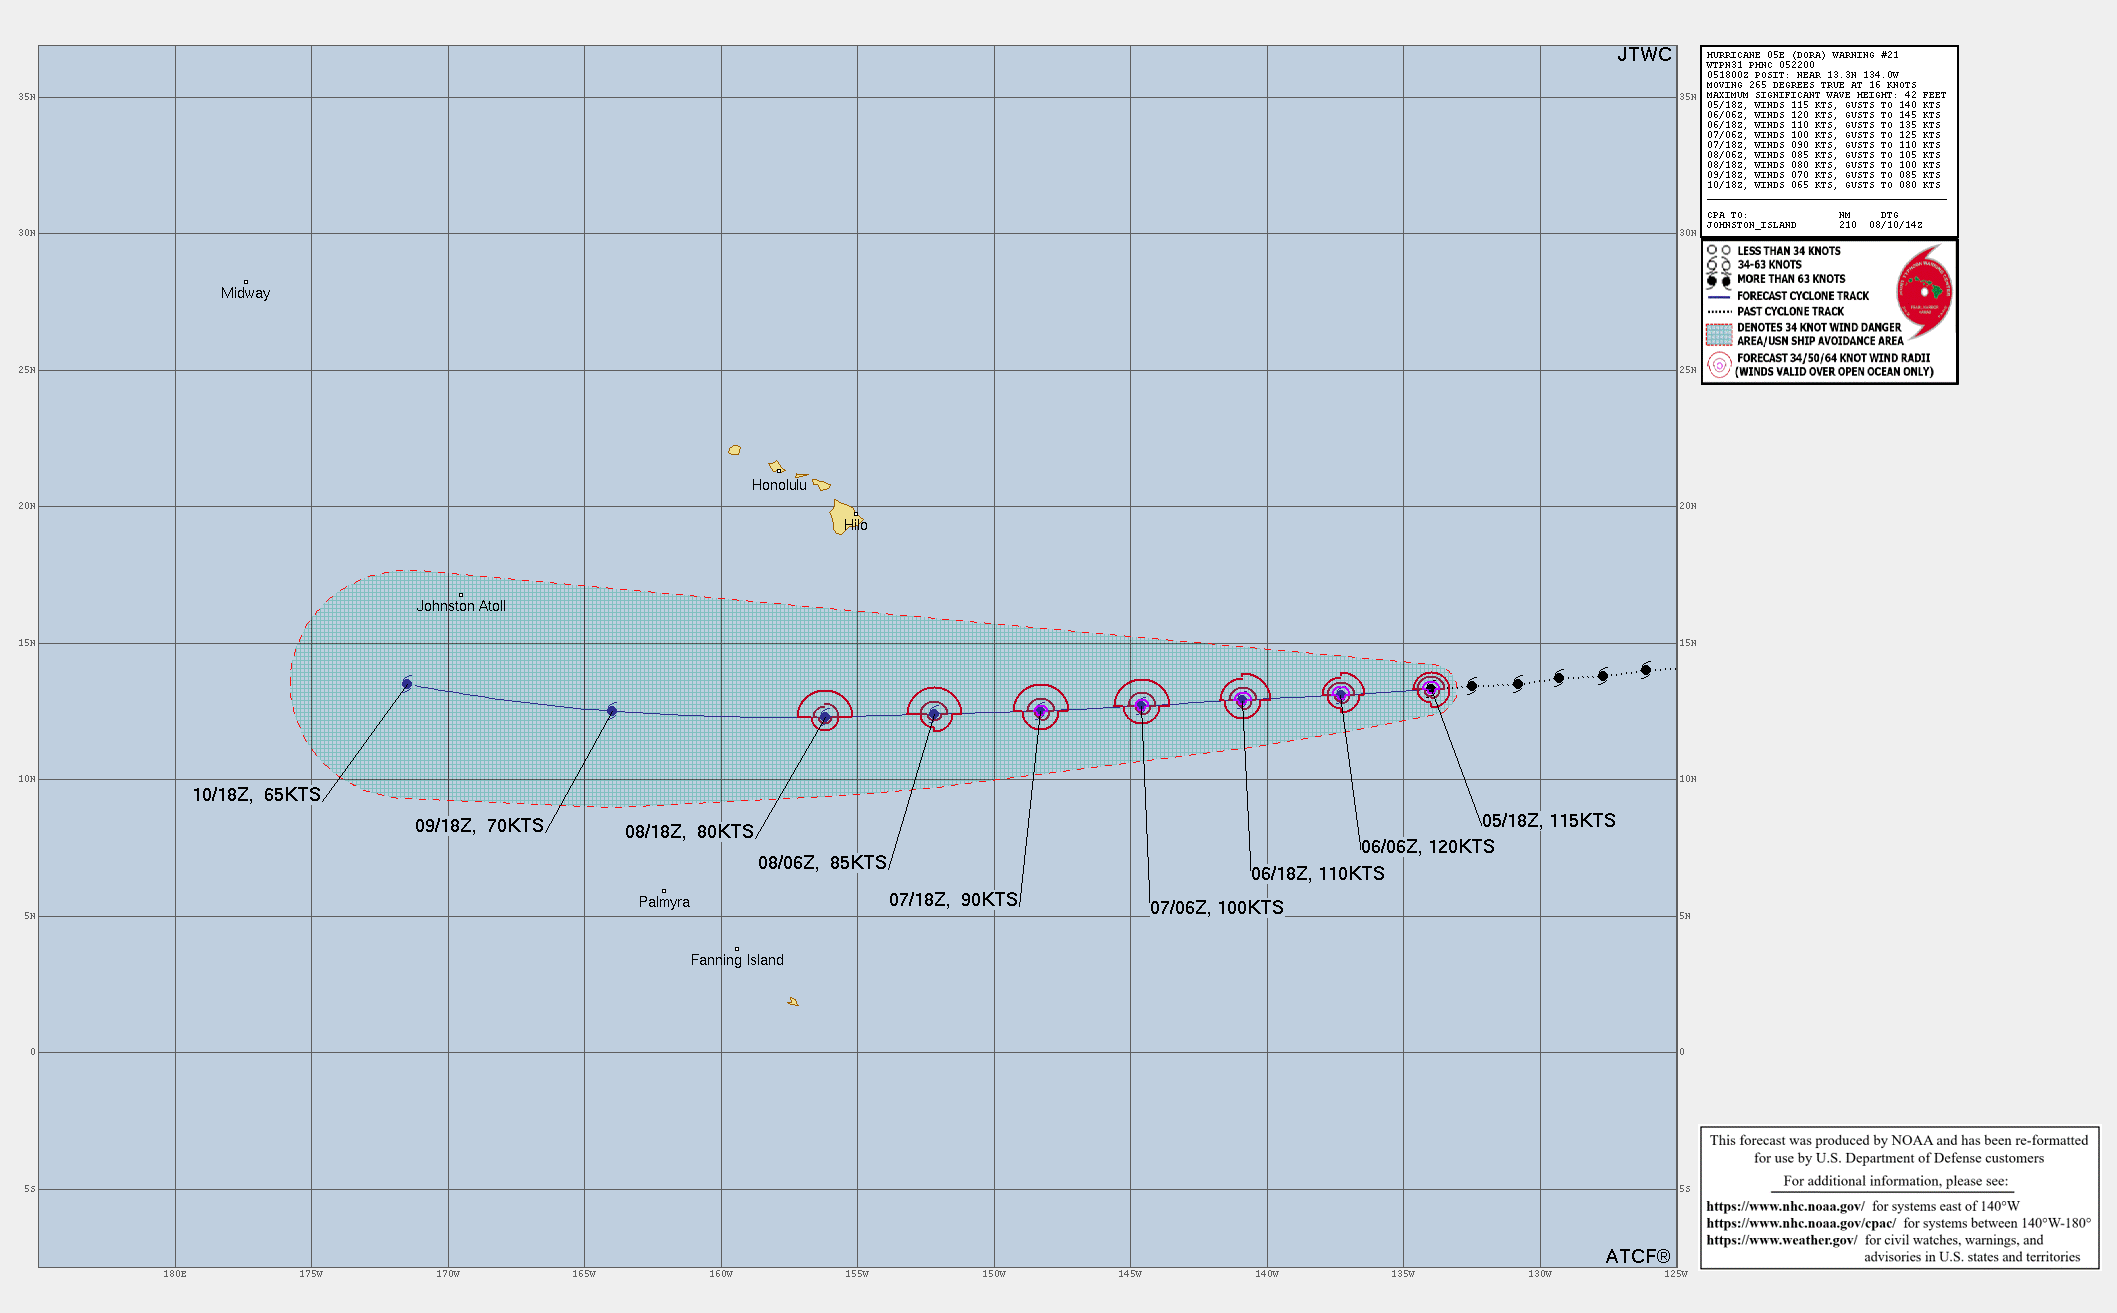 06W(KHANUN)to approach KYUSHU by 48/72H at Typhoon intensity//05E(DORA) powerful CAT 4 US//06E(EUGENE) intensifying//0521utc